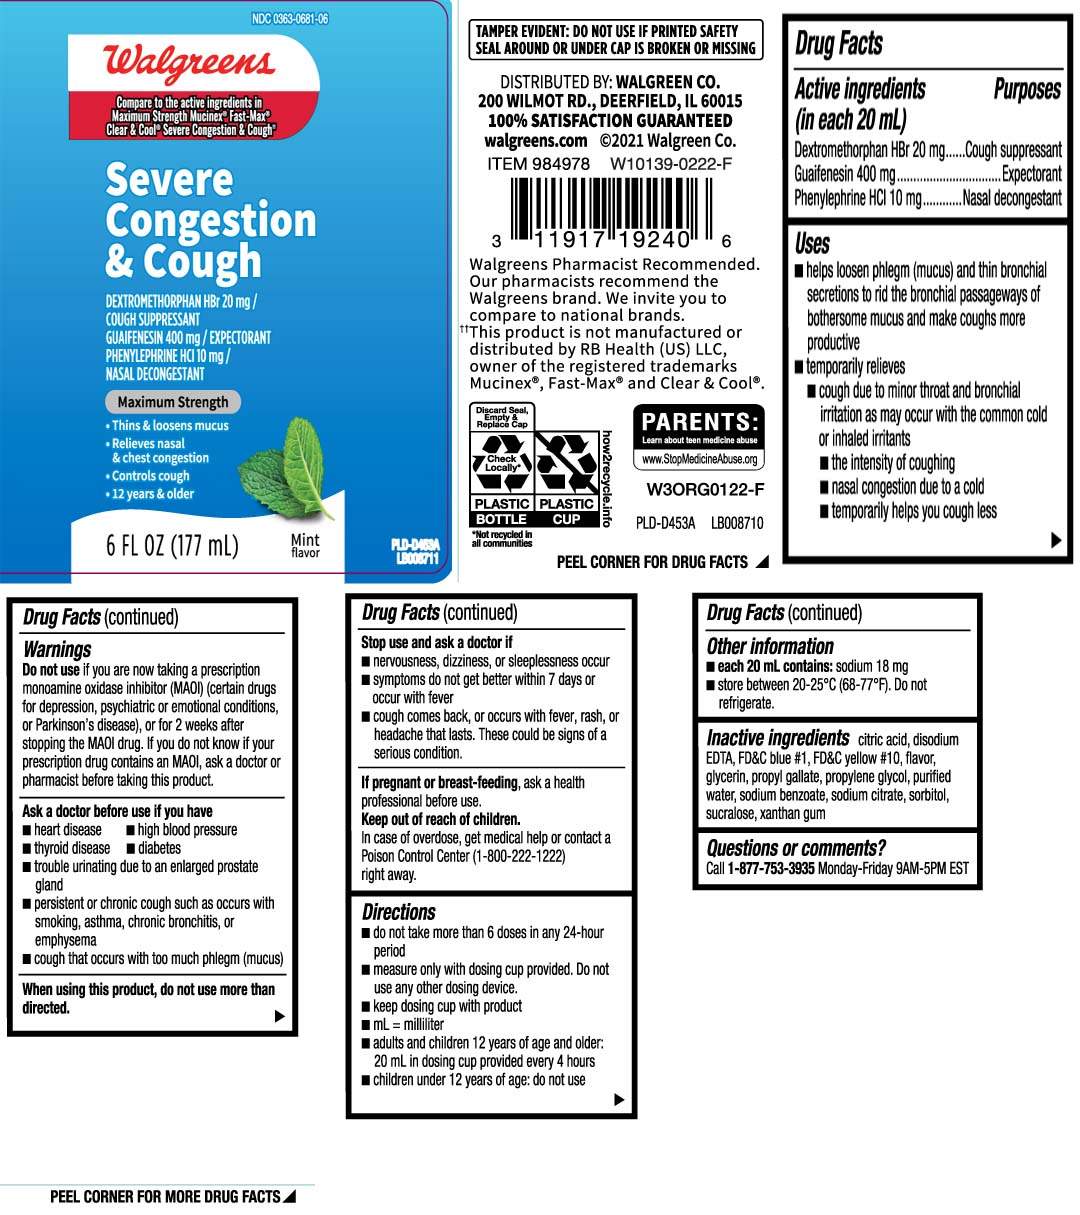 Dextromethorphan HBr 20 mg, Guaifenesin 400 mg, Phenylephrine HCl 10 mg